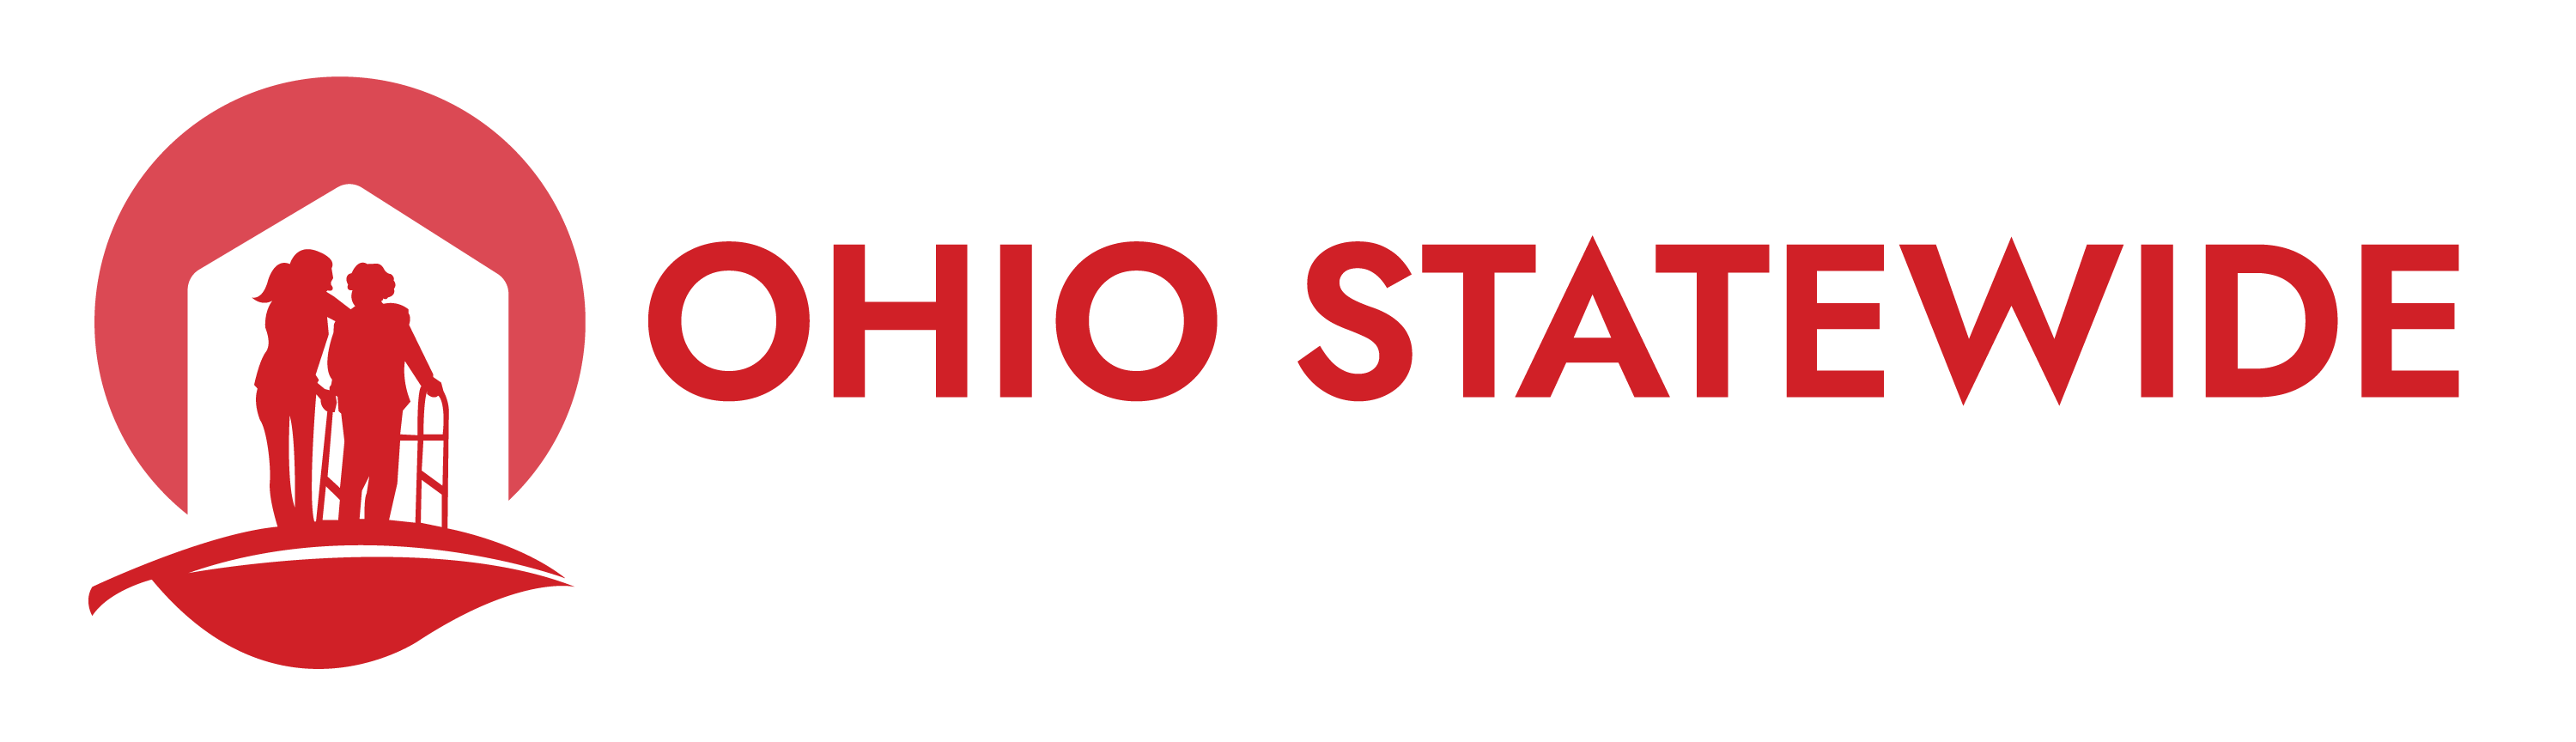 Ohio Statewide